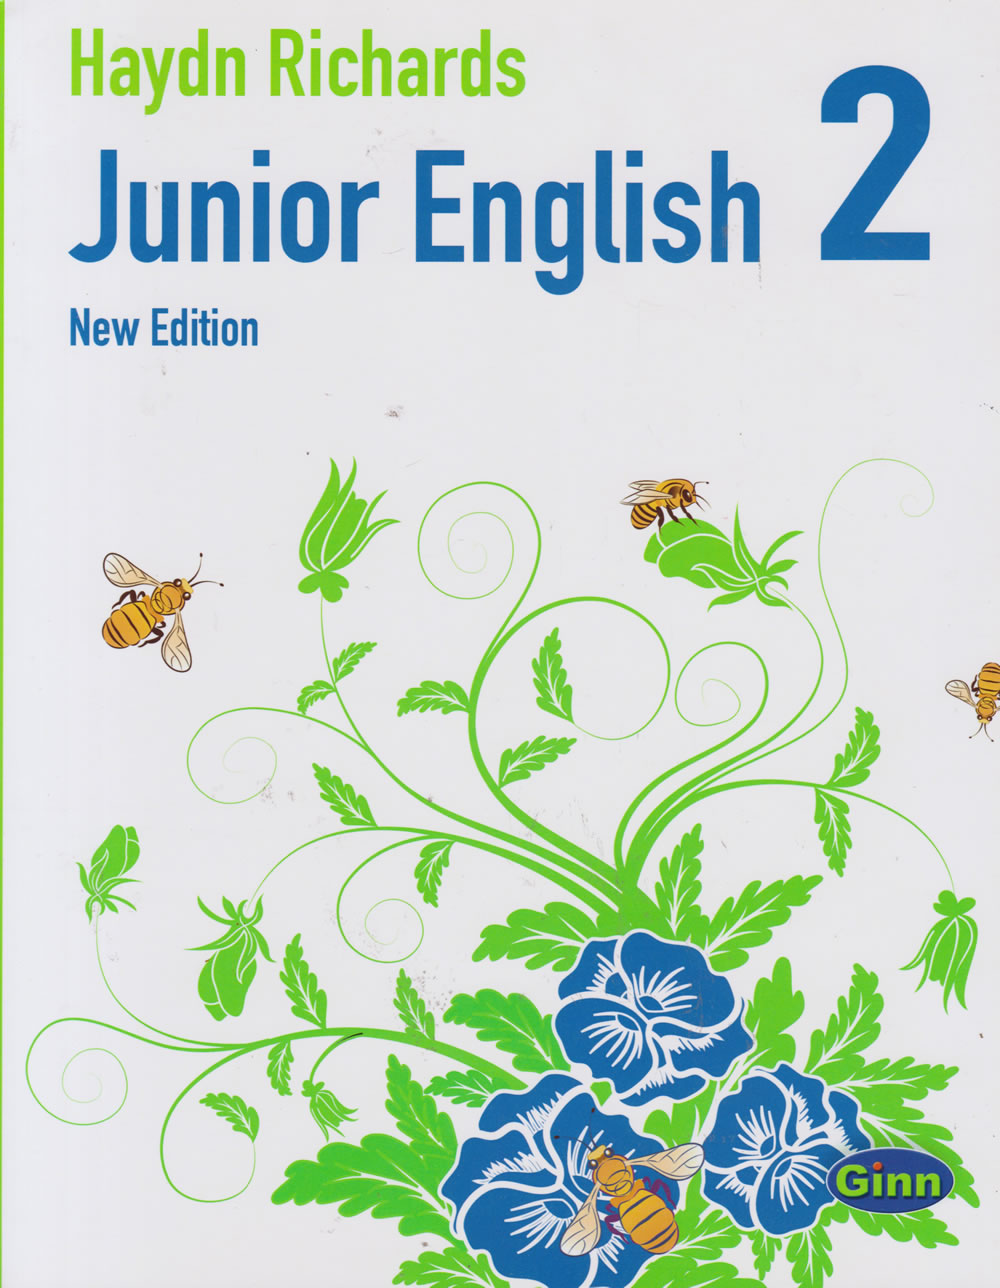 Junior English Book 4 Answers Pdf